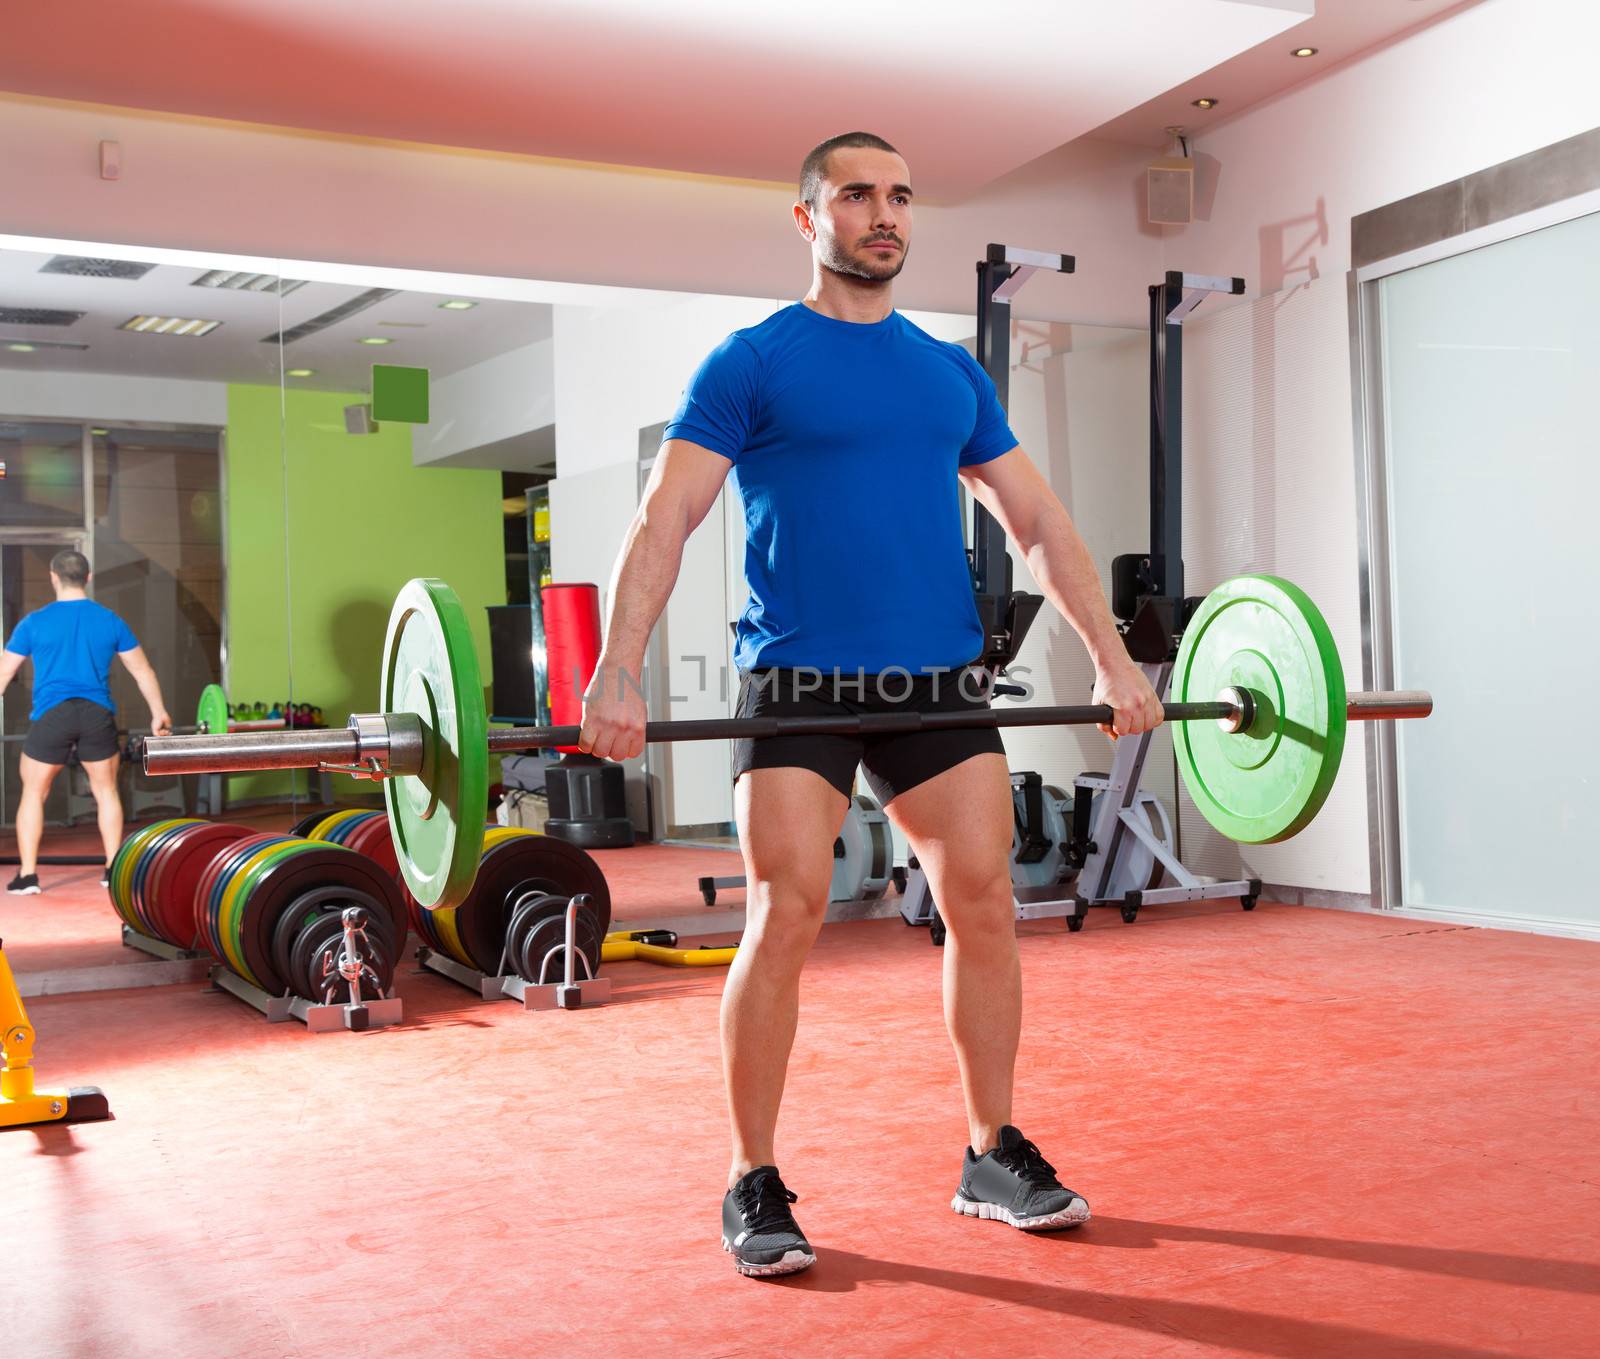 Crossfit fitness gym weight lifting bar man workout by lunamarina